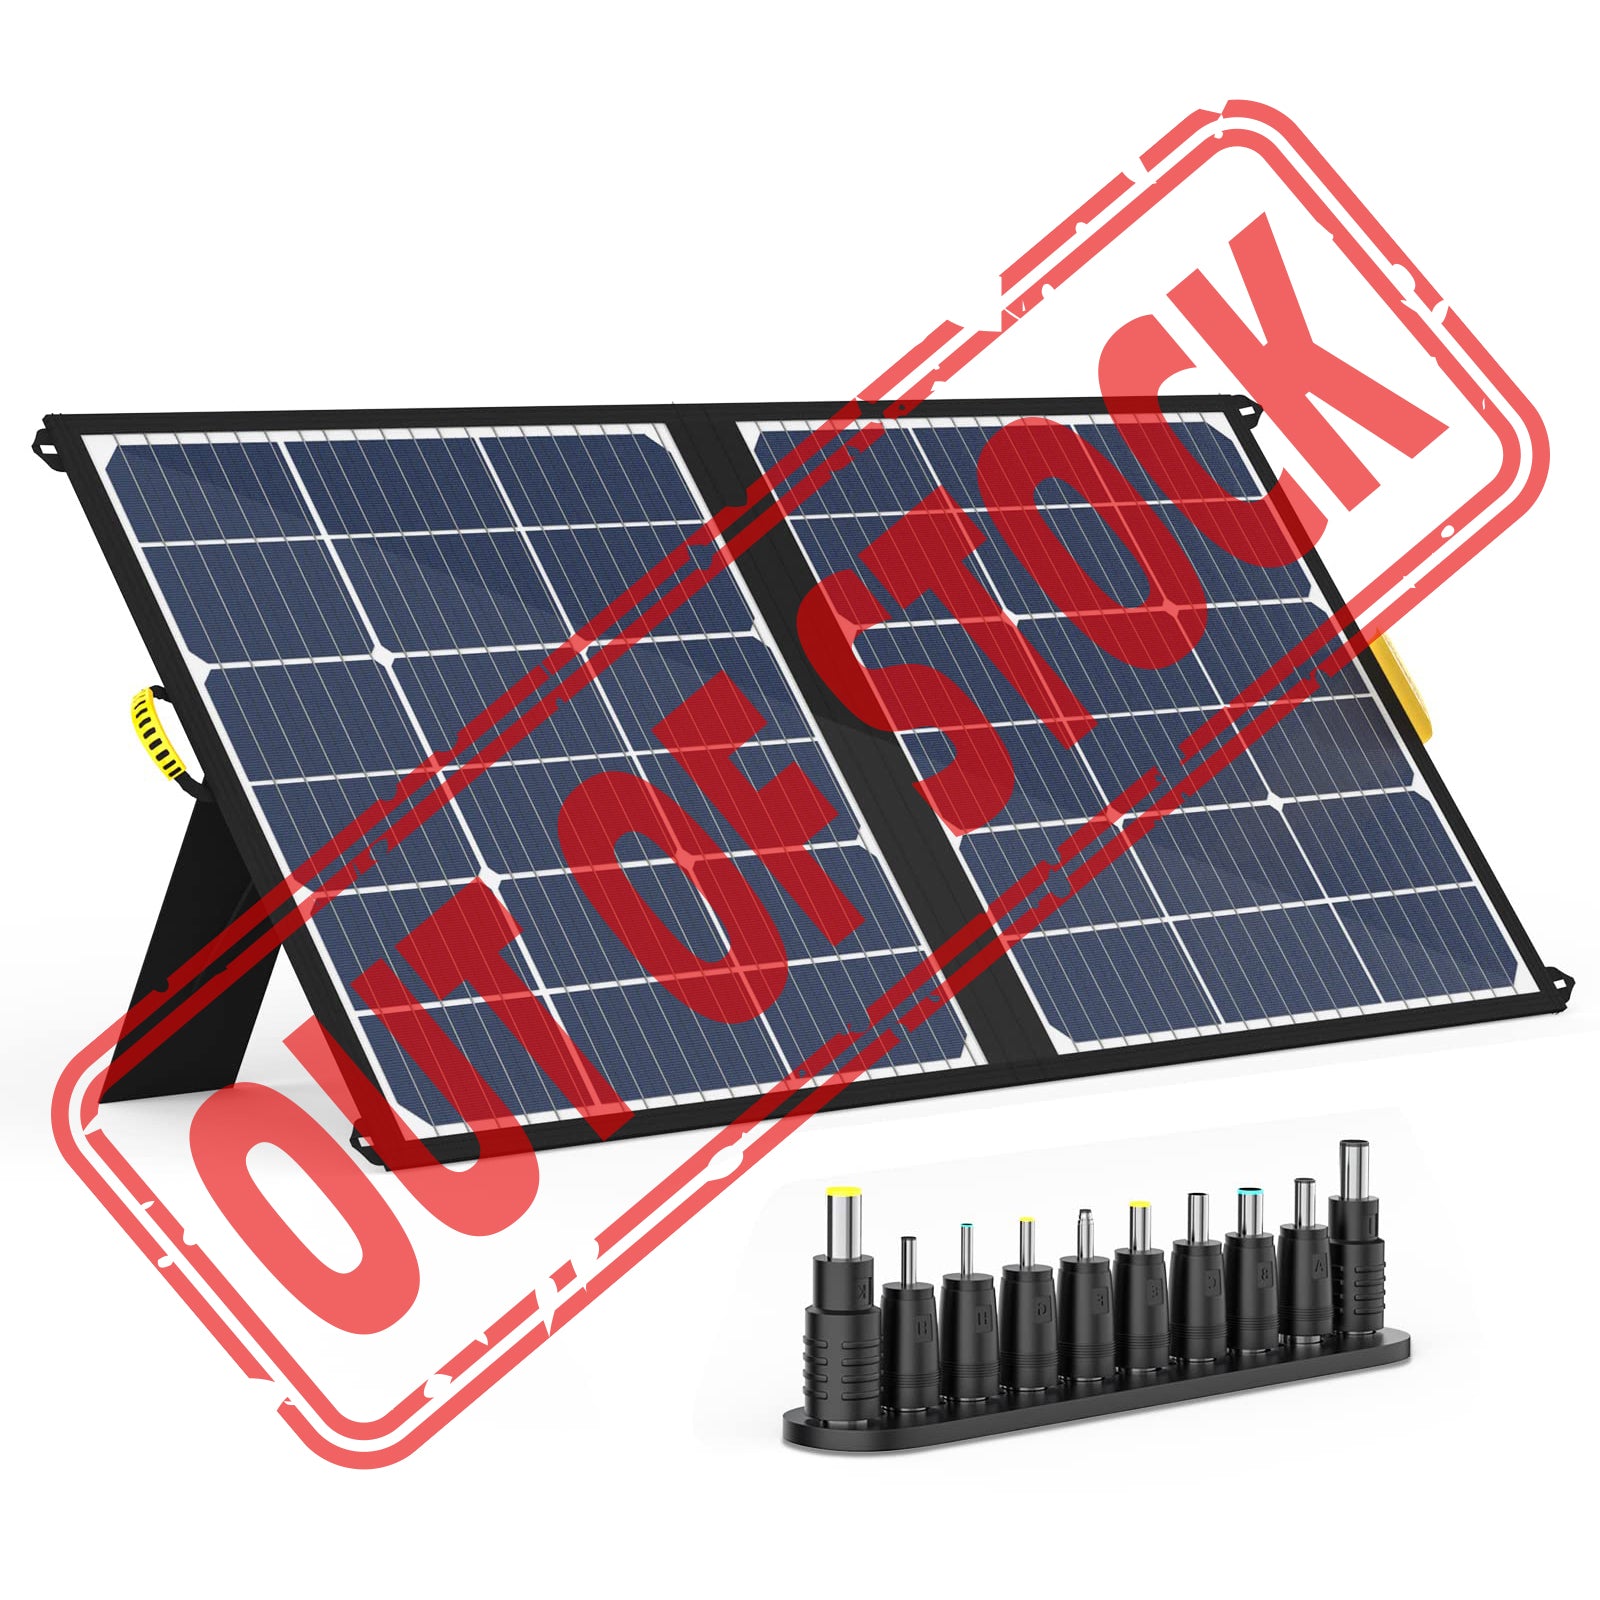 VTOMAN Portable Solar Panel for Power Station, 220W 19V Foldable Solar  Panel w/Supporting Stand, High 23% Efficiency Monocrystalline Solar Cells  for